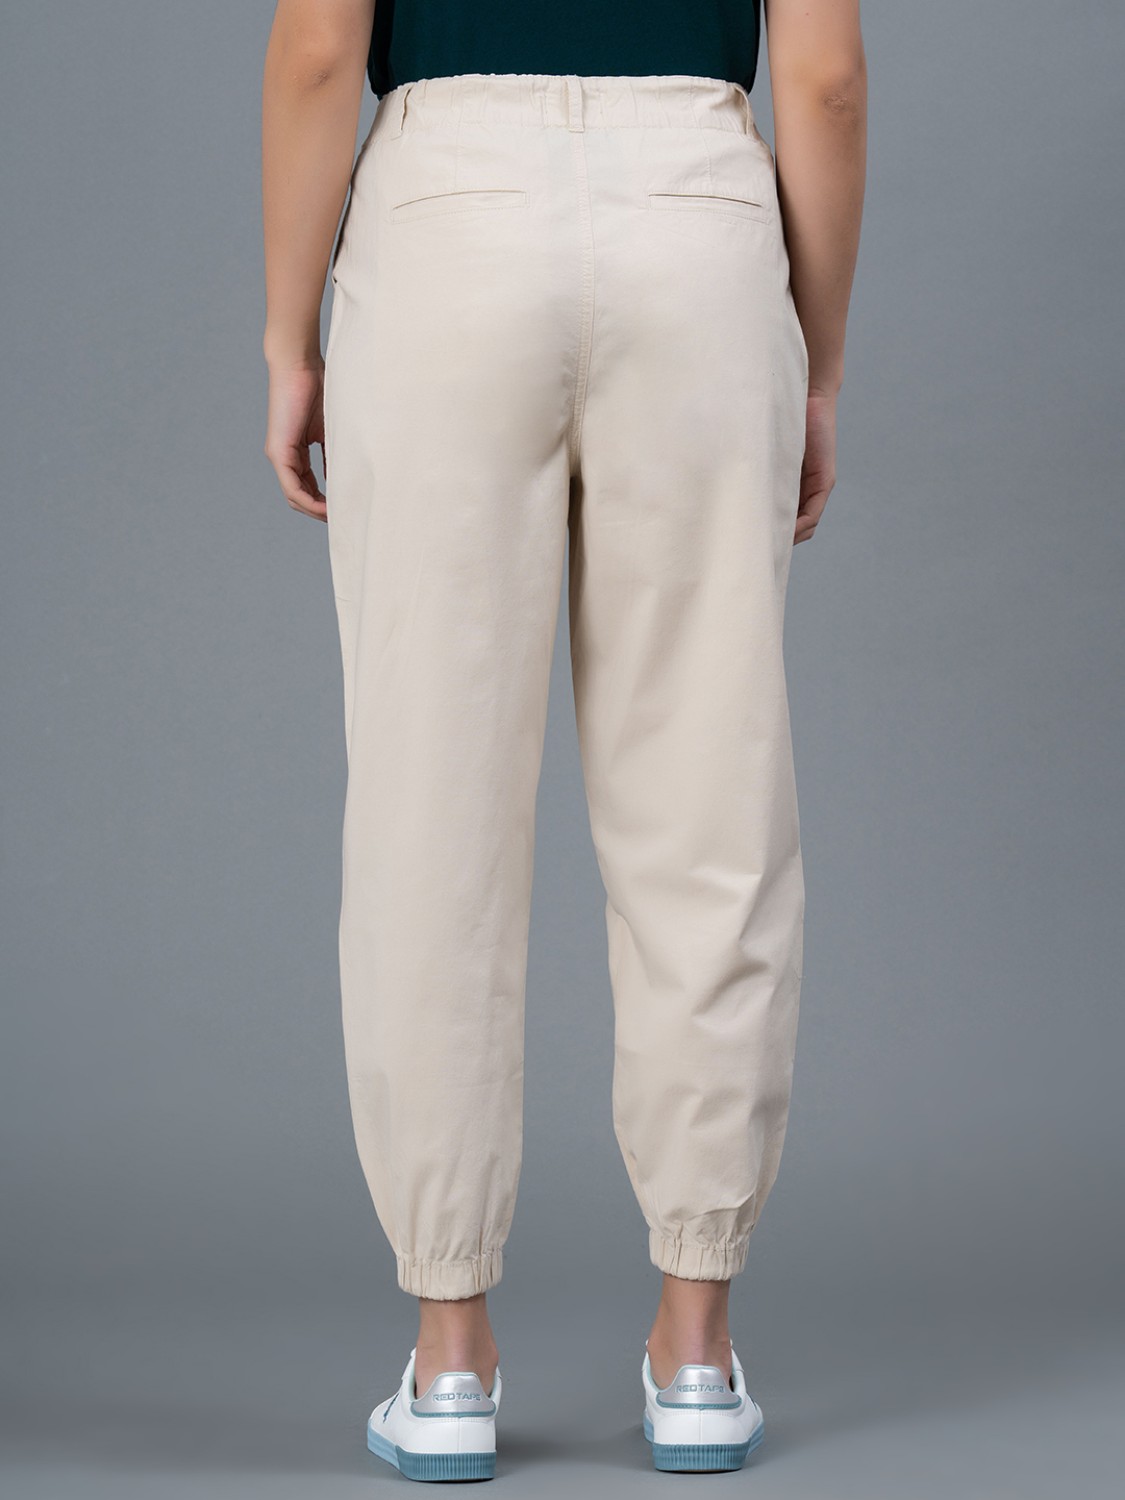 Buy Rust Orange Trousers  Pants for Women by Mode By Red Tape Online   Ajiocom